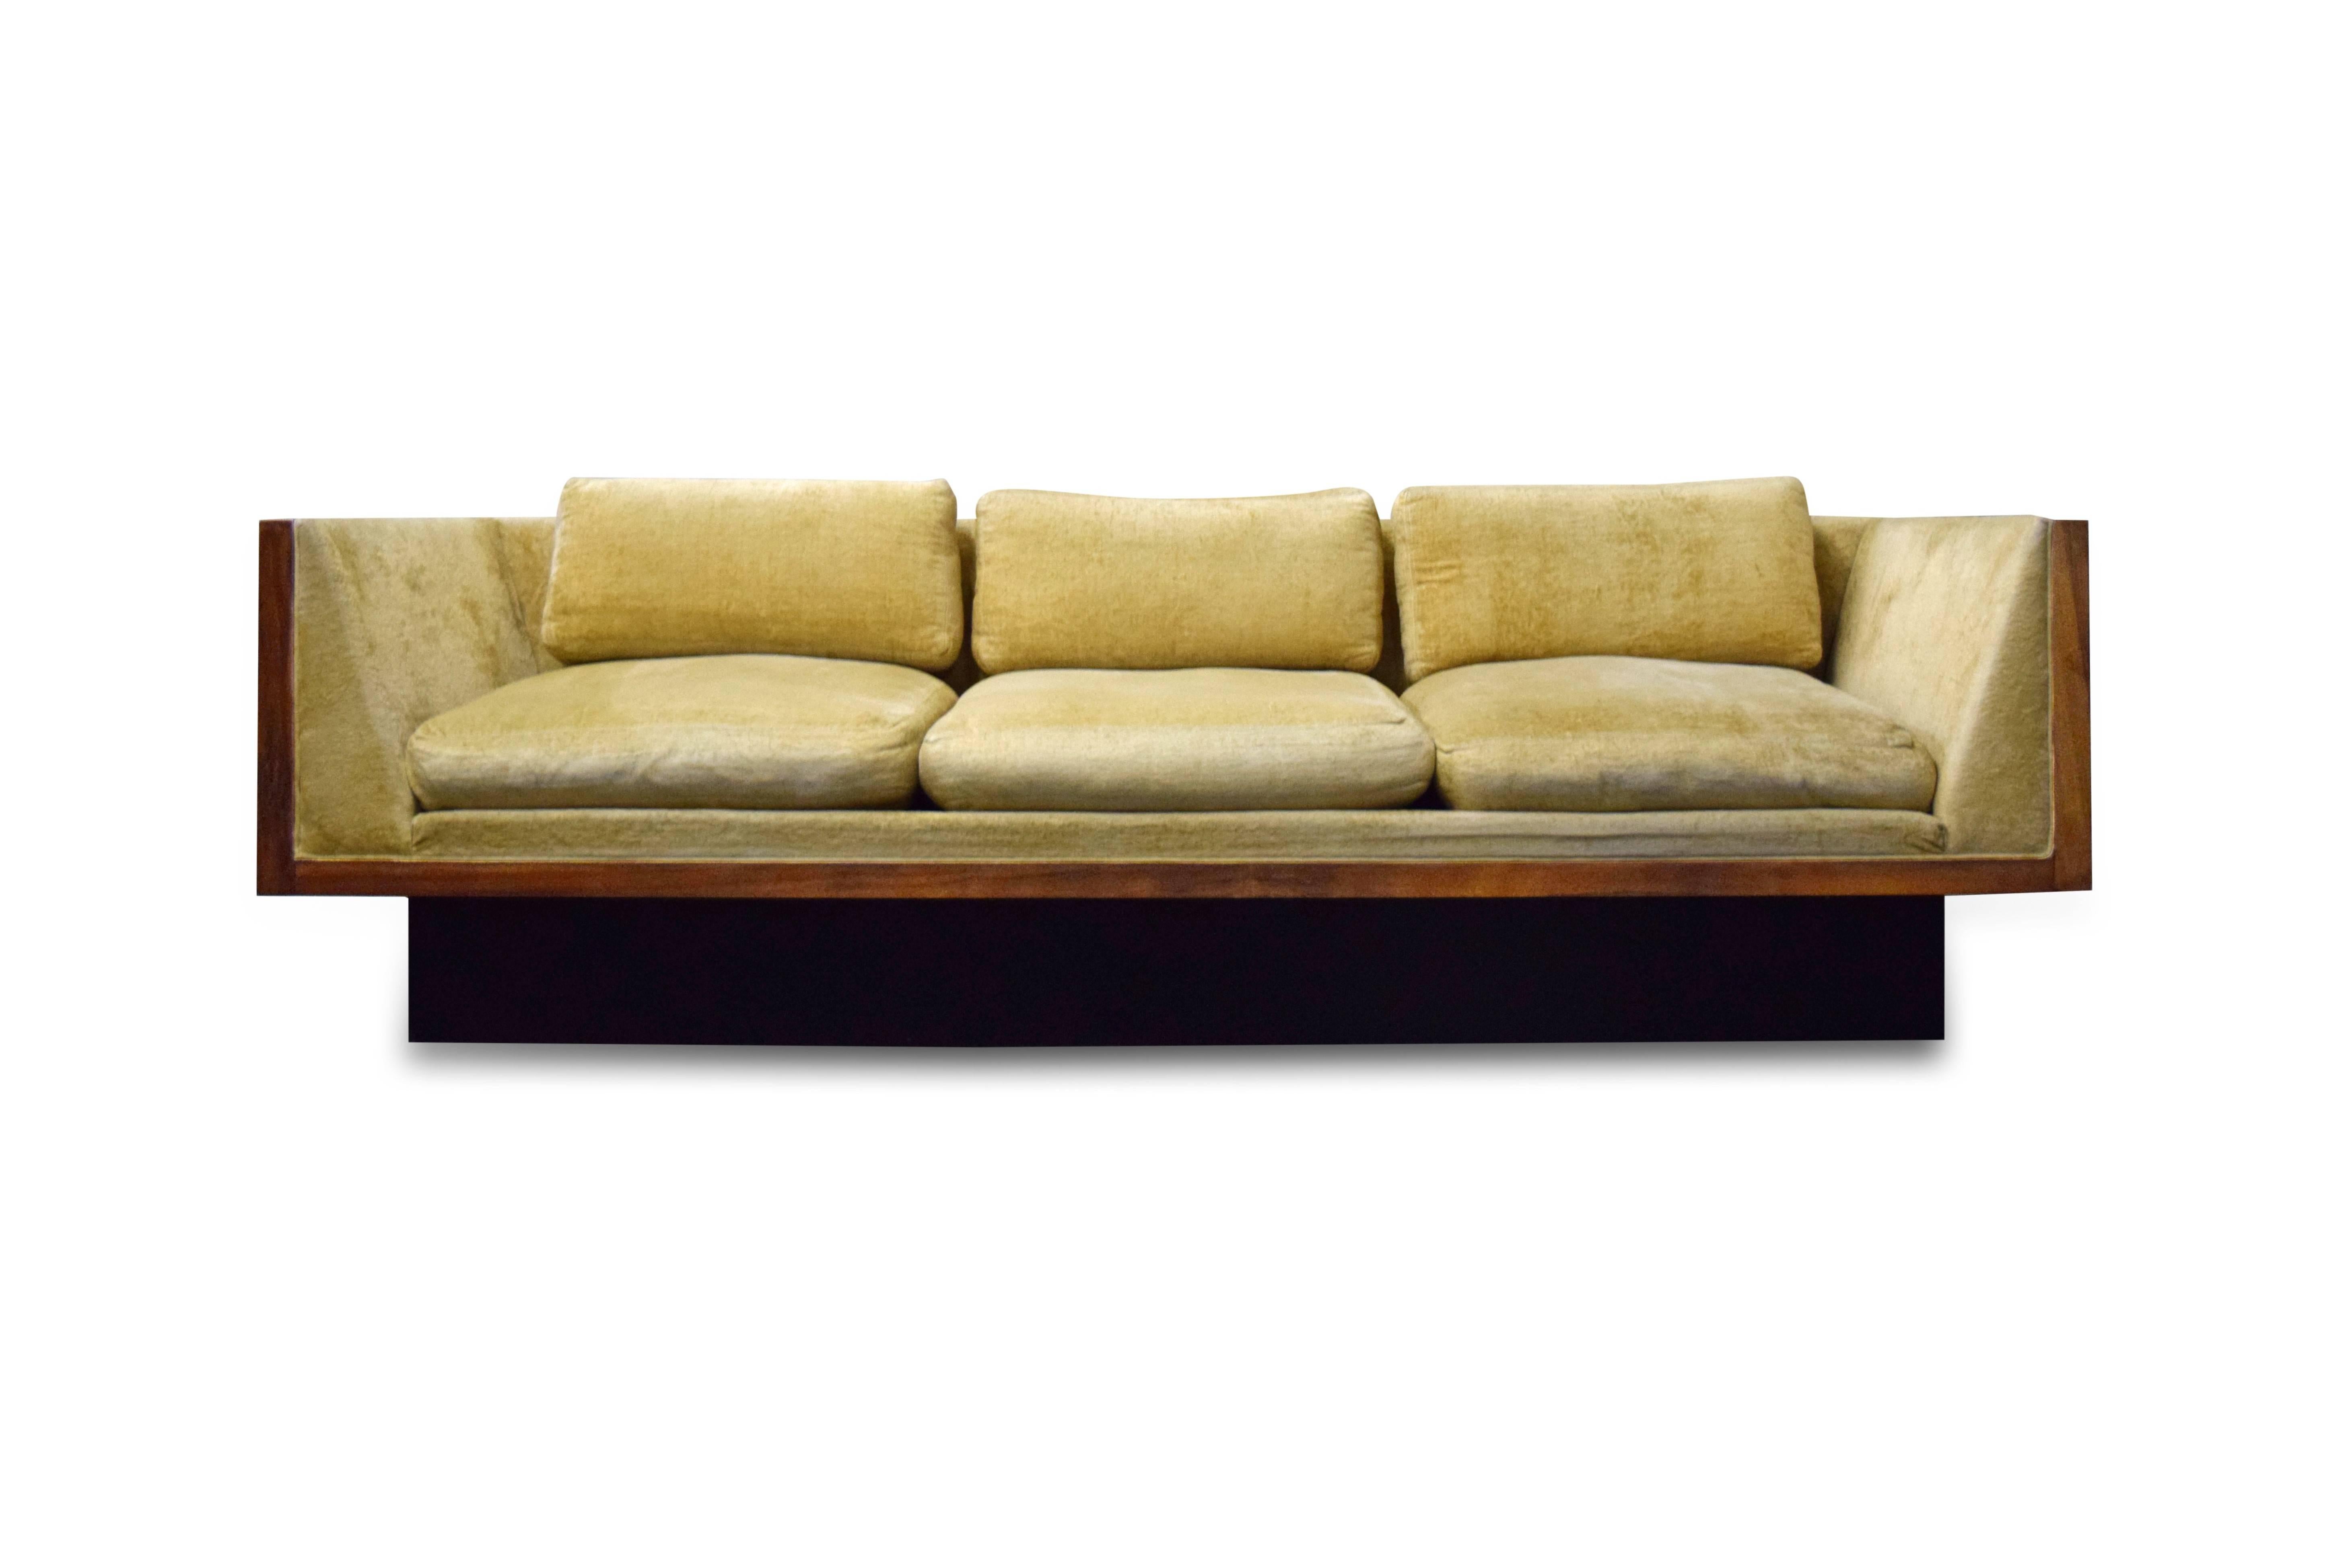 Early Milo Baughman for Thayer Coggin rosewood case sofa.
Sofa has original fabric and label.